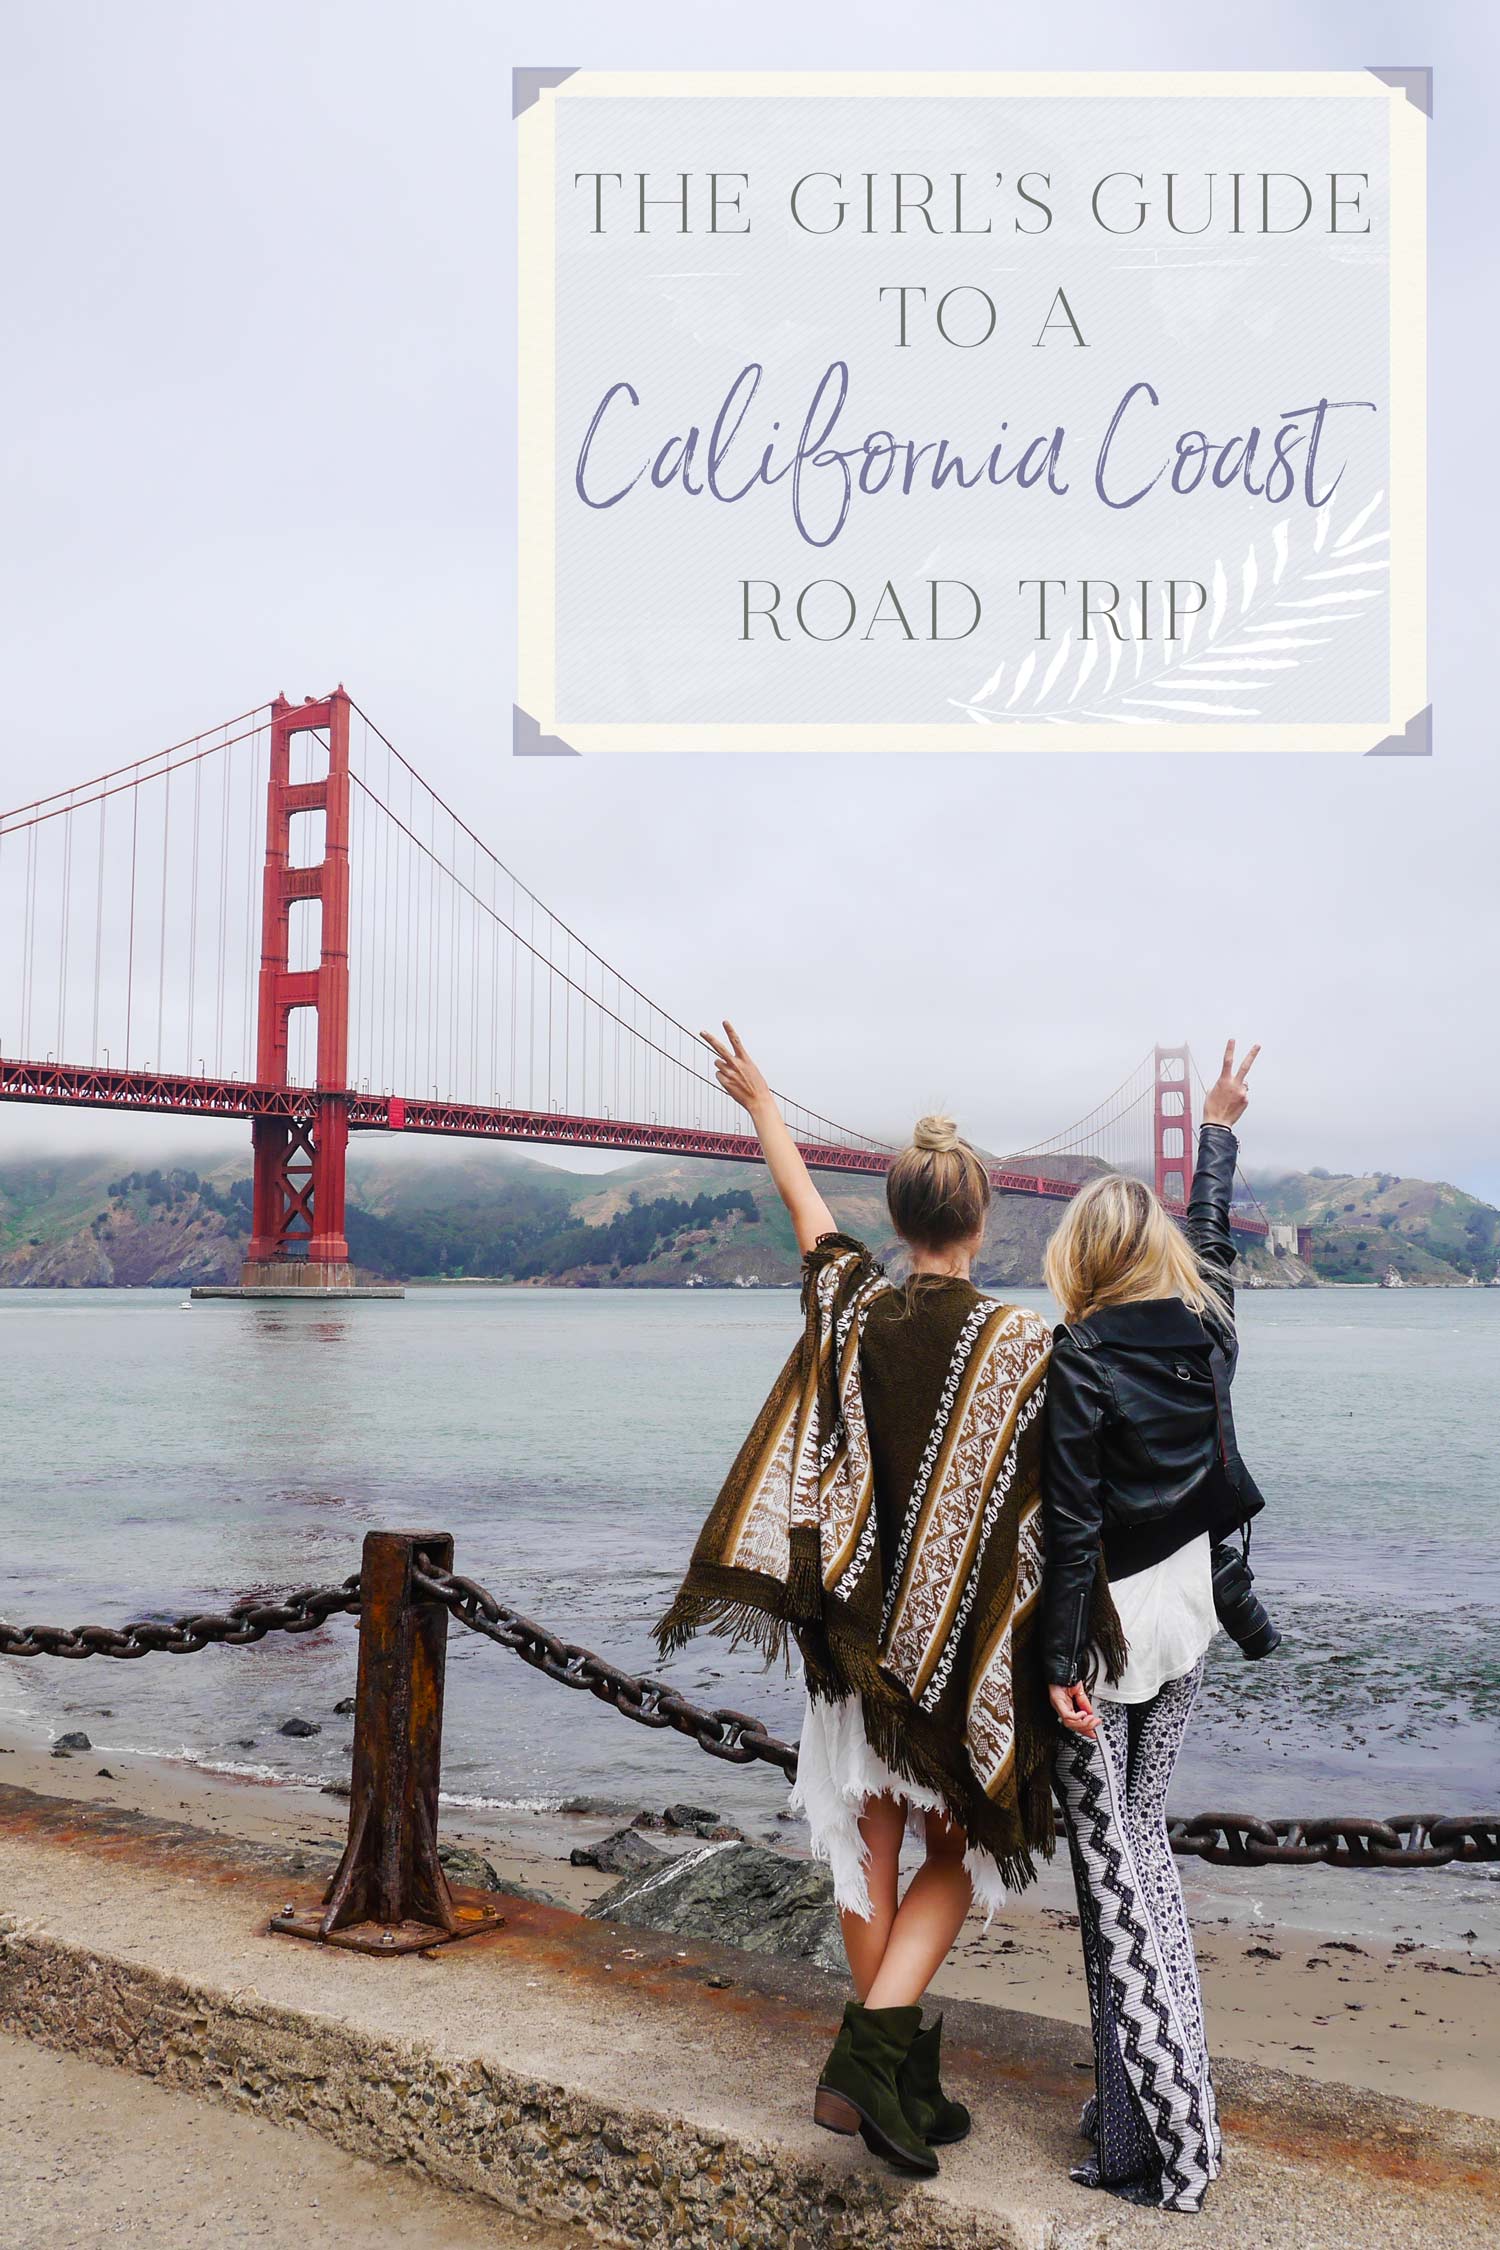 Girls Guide to a California Coast Road Trip